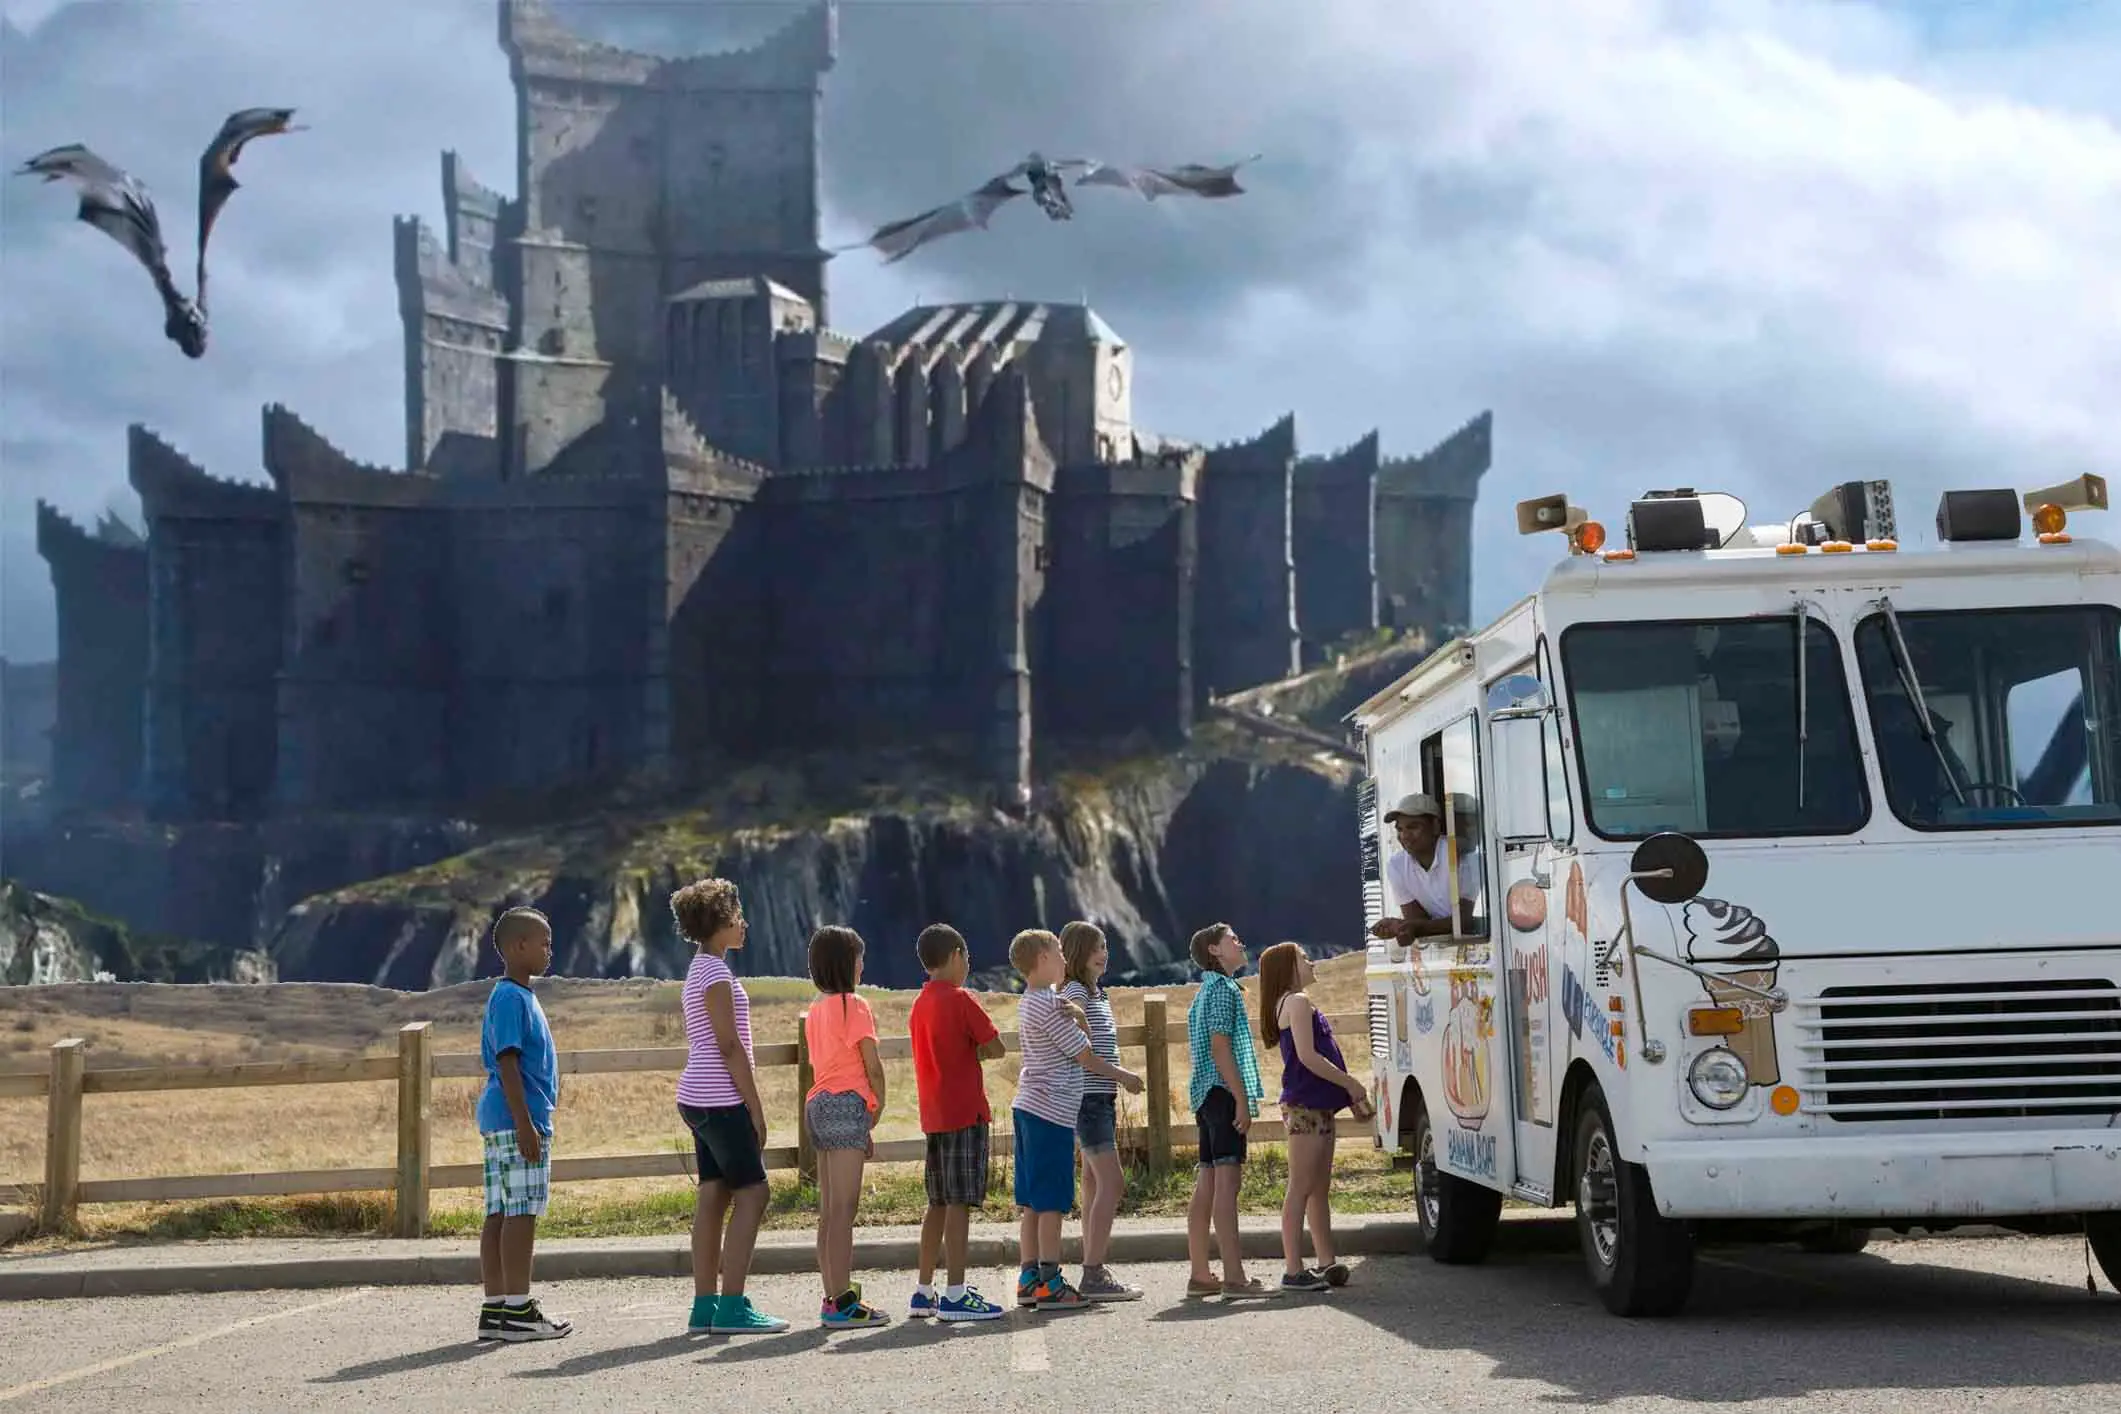 Game of Croq’, un food truck français inspiré par Game of Thrones